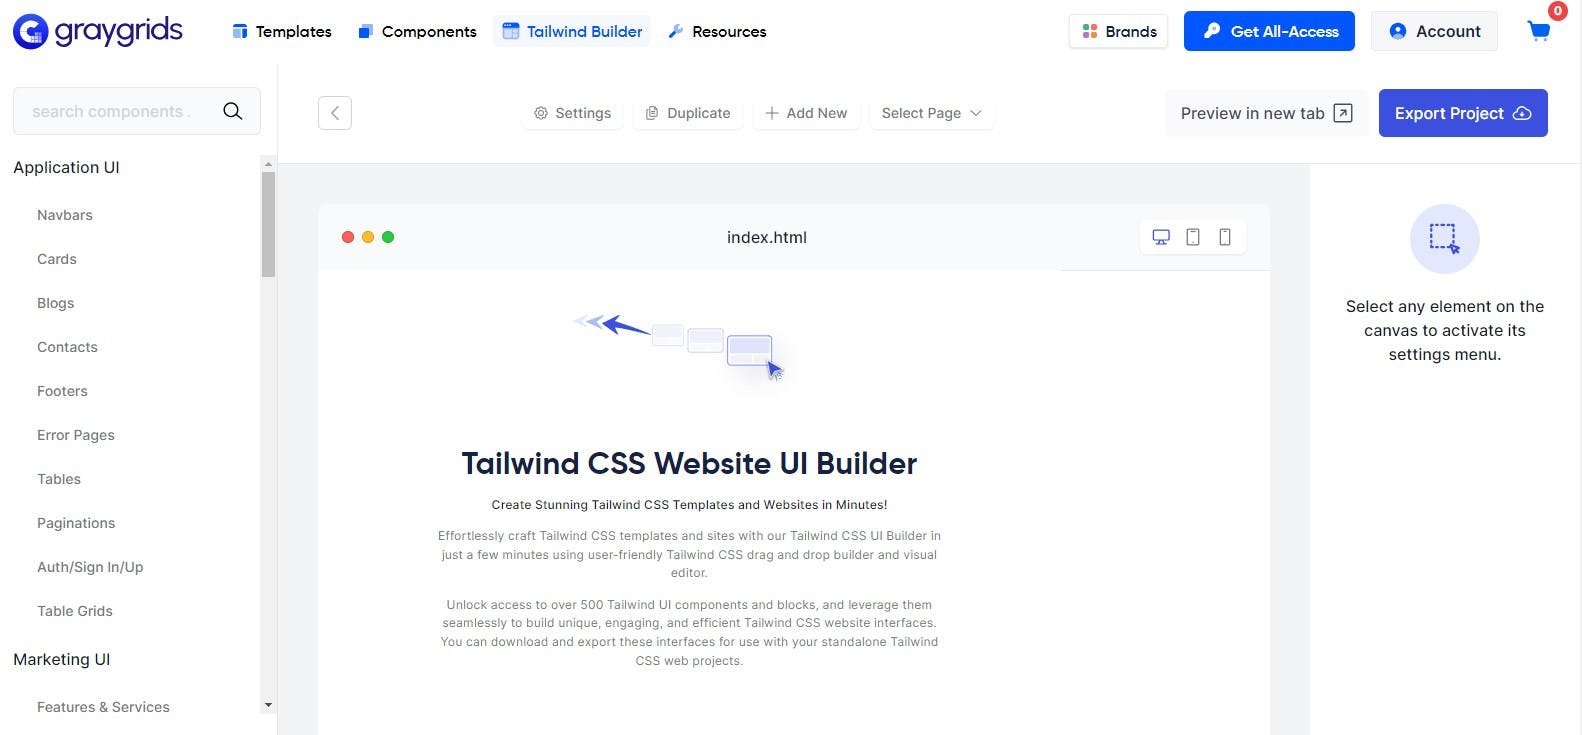 Tailwind CSS Website UI Builder